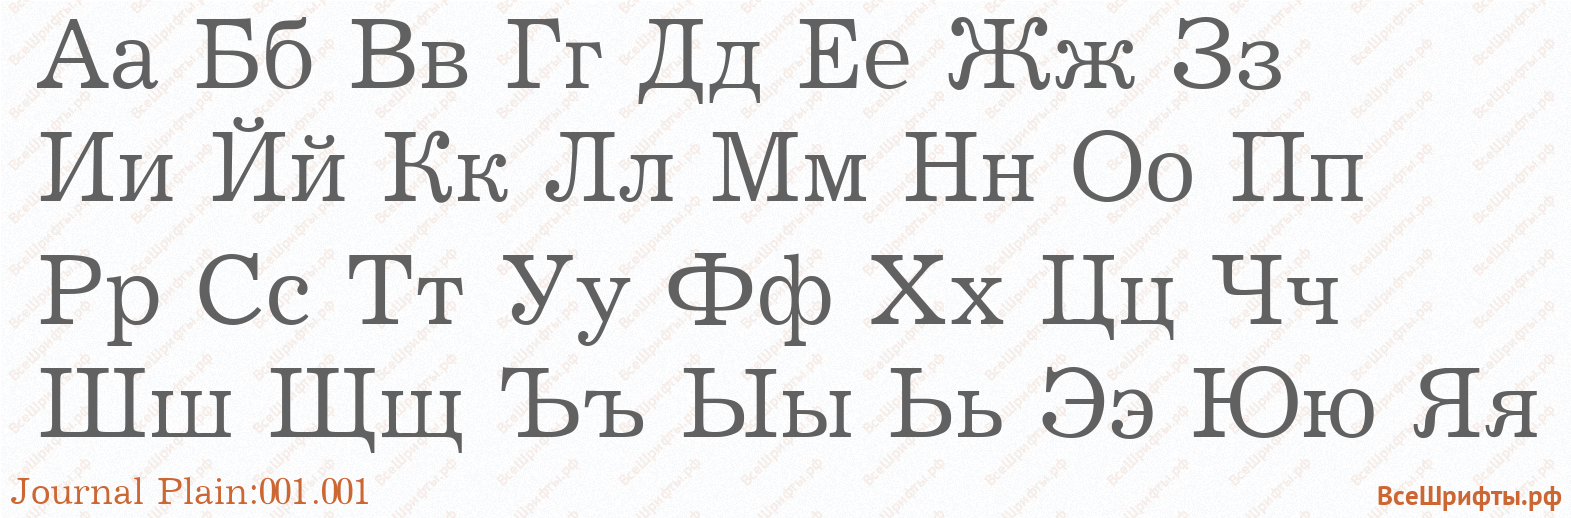 Шрифт Journal Plain:001.001 с русскими буквами